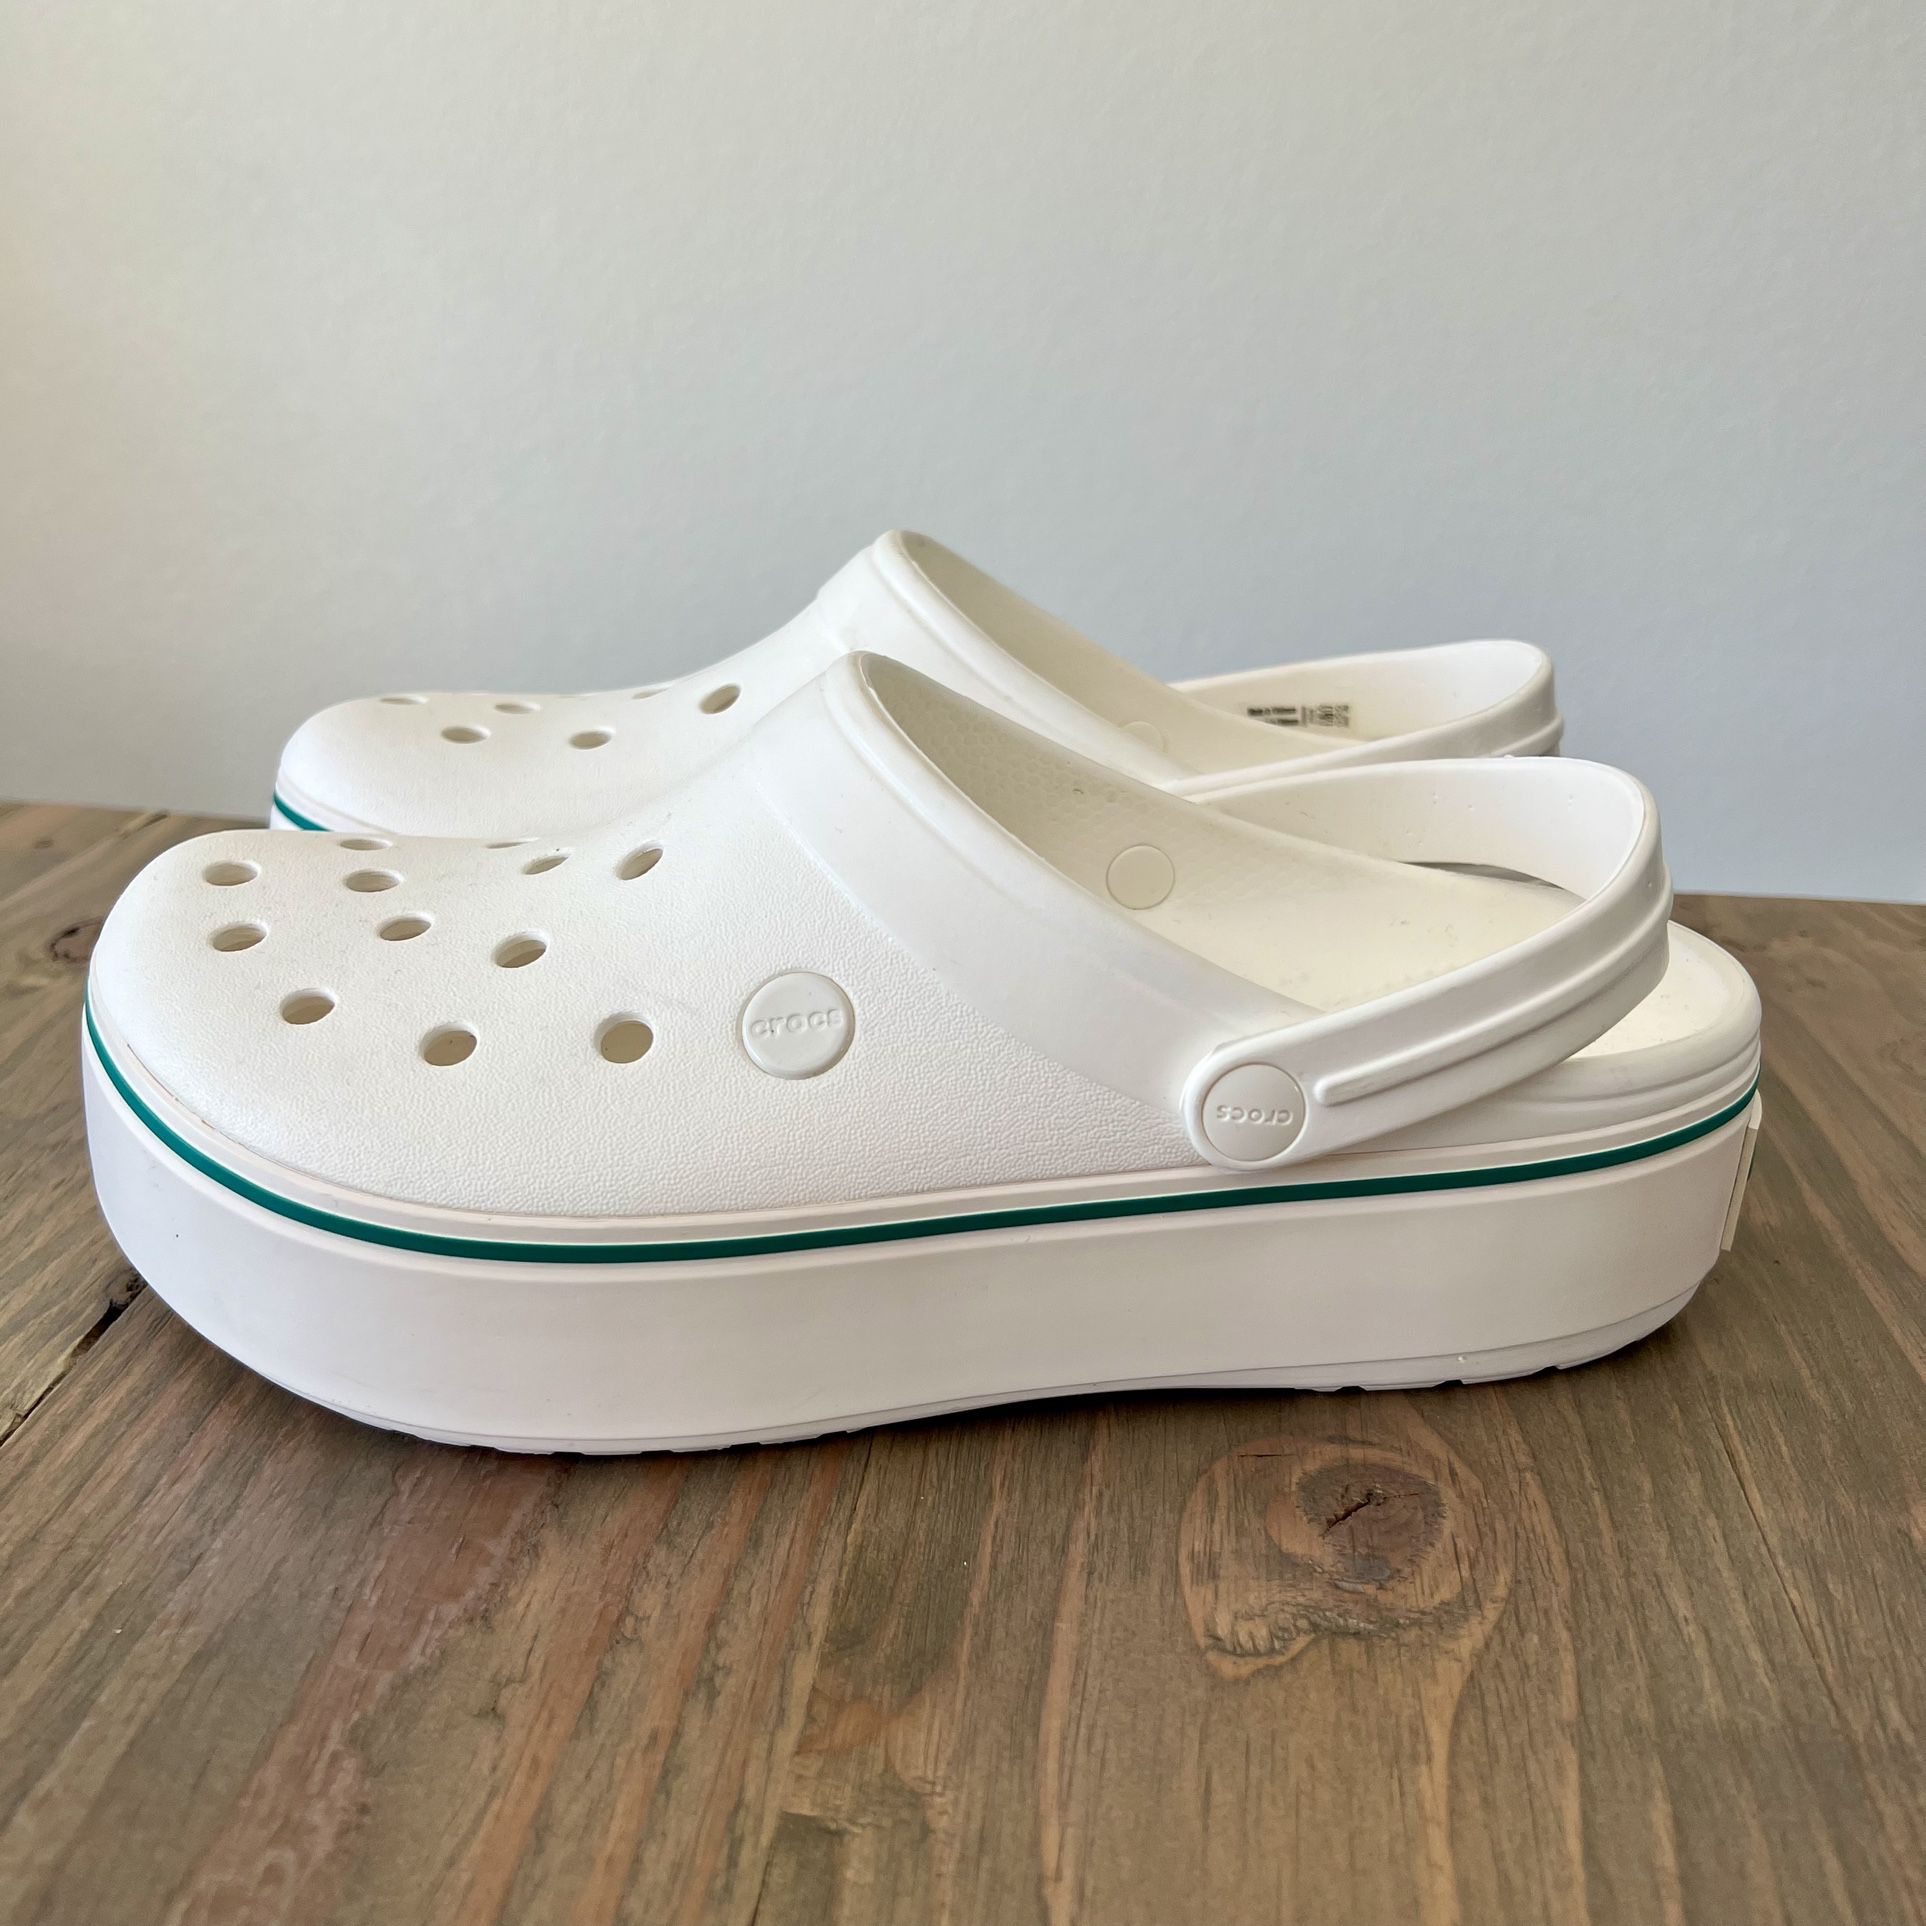 Crocs White Platform Slip On Shoes Women's Size 9